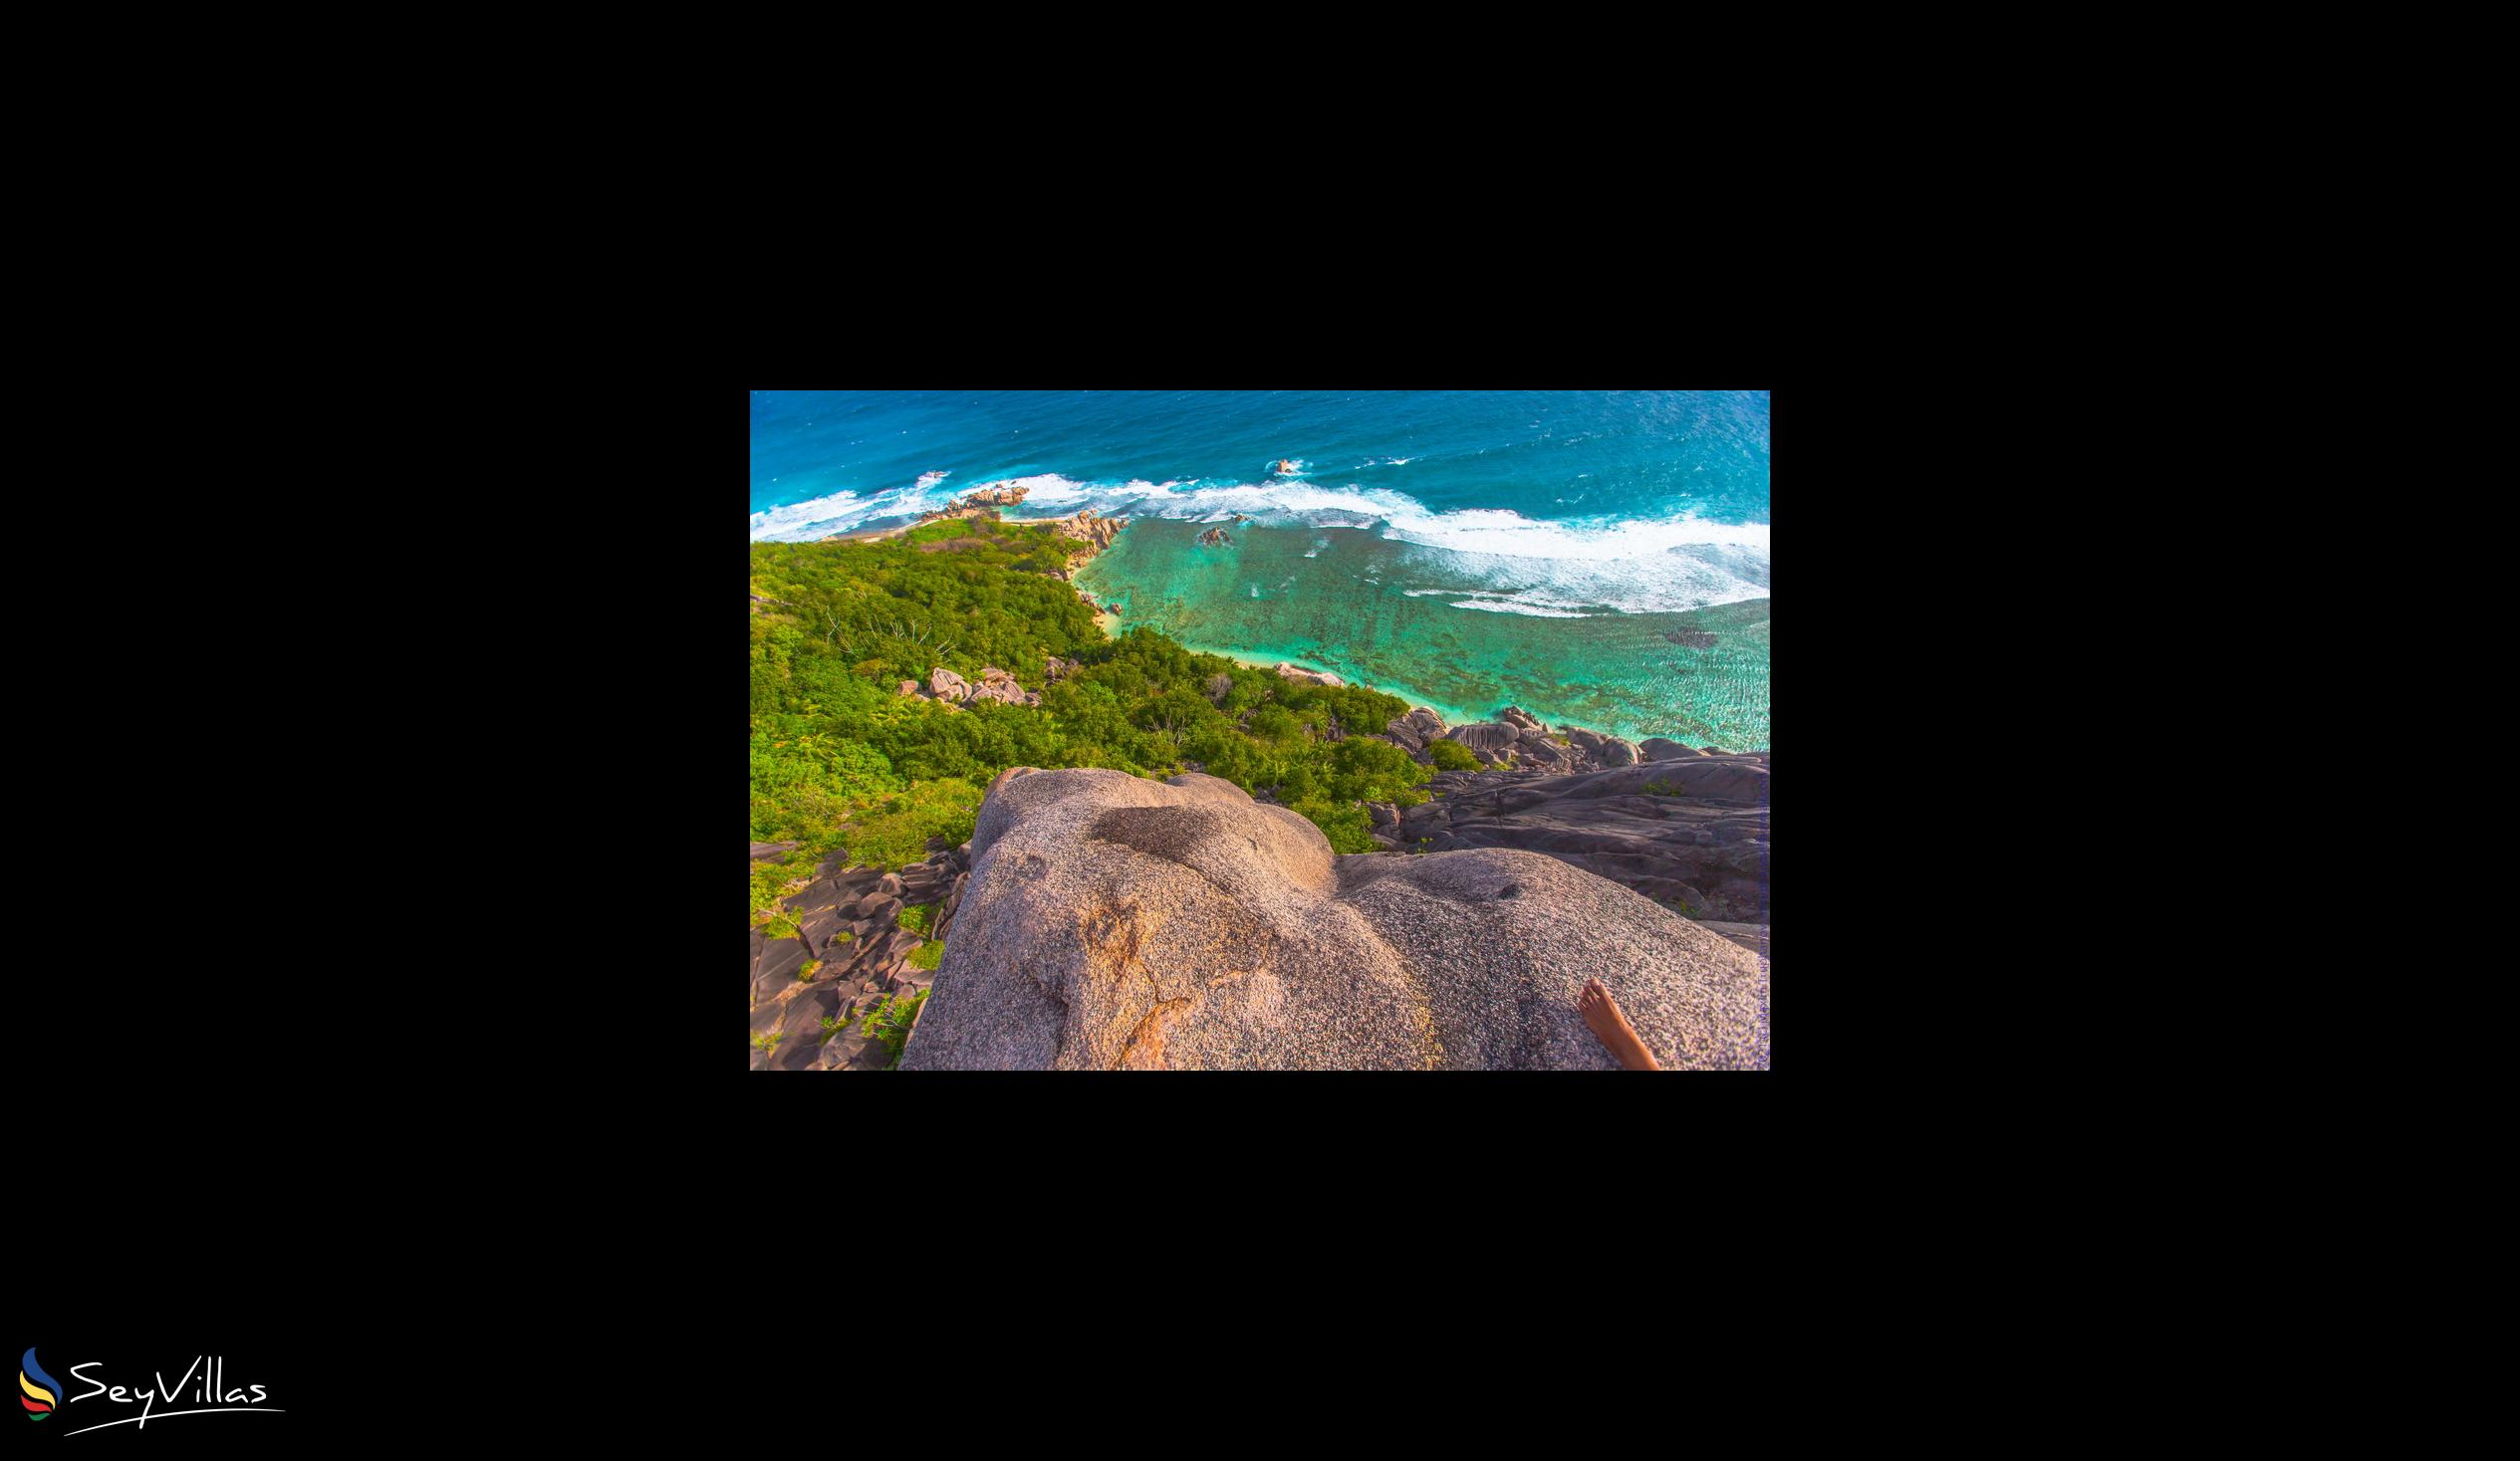 Photo 35: Ambiance Villa - Location - La Digue (Seychelles)